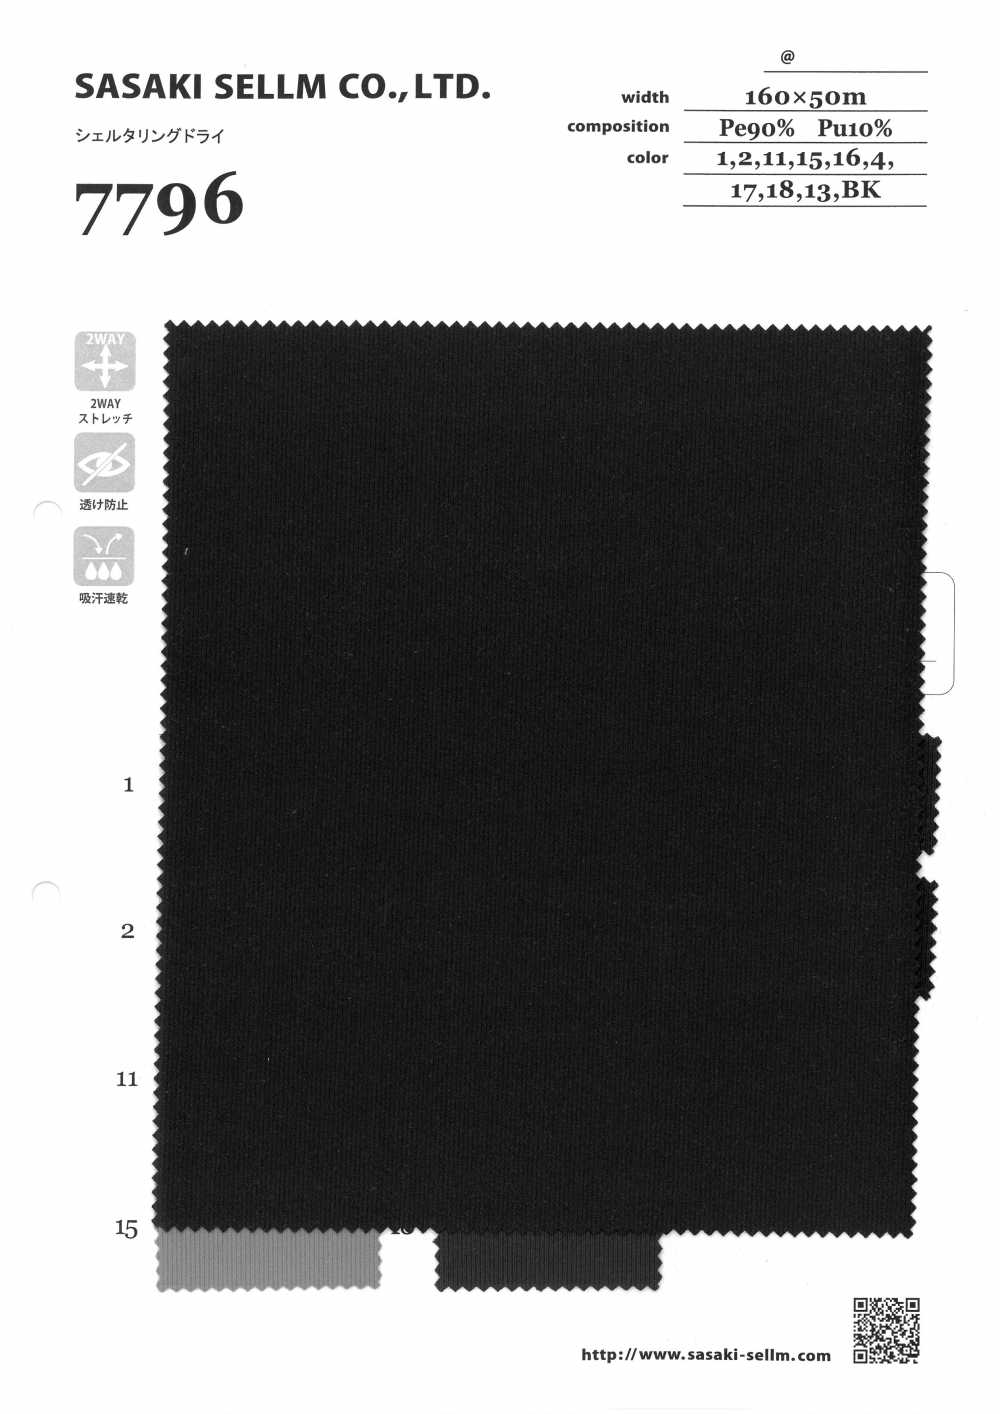 7796 Schutz Trocken[Textilgewebe] SASAKISELLM